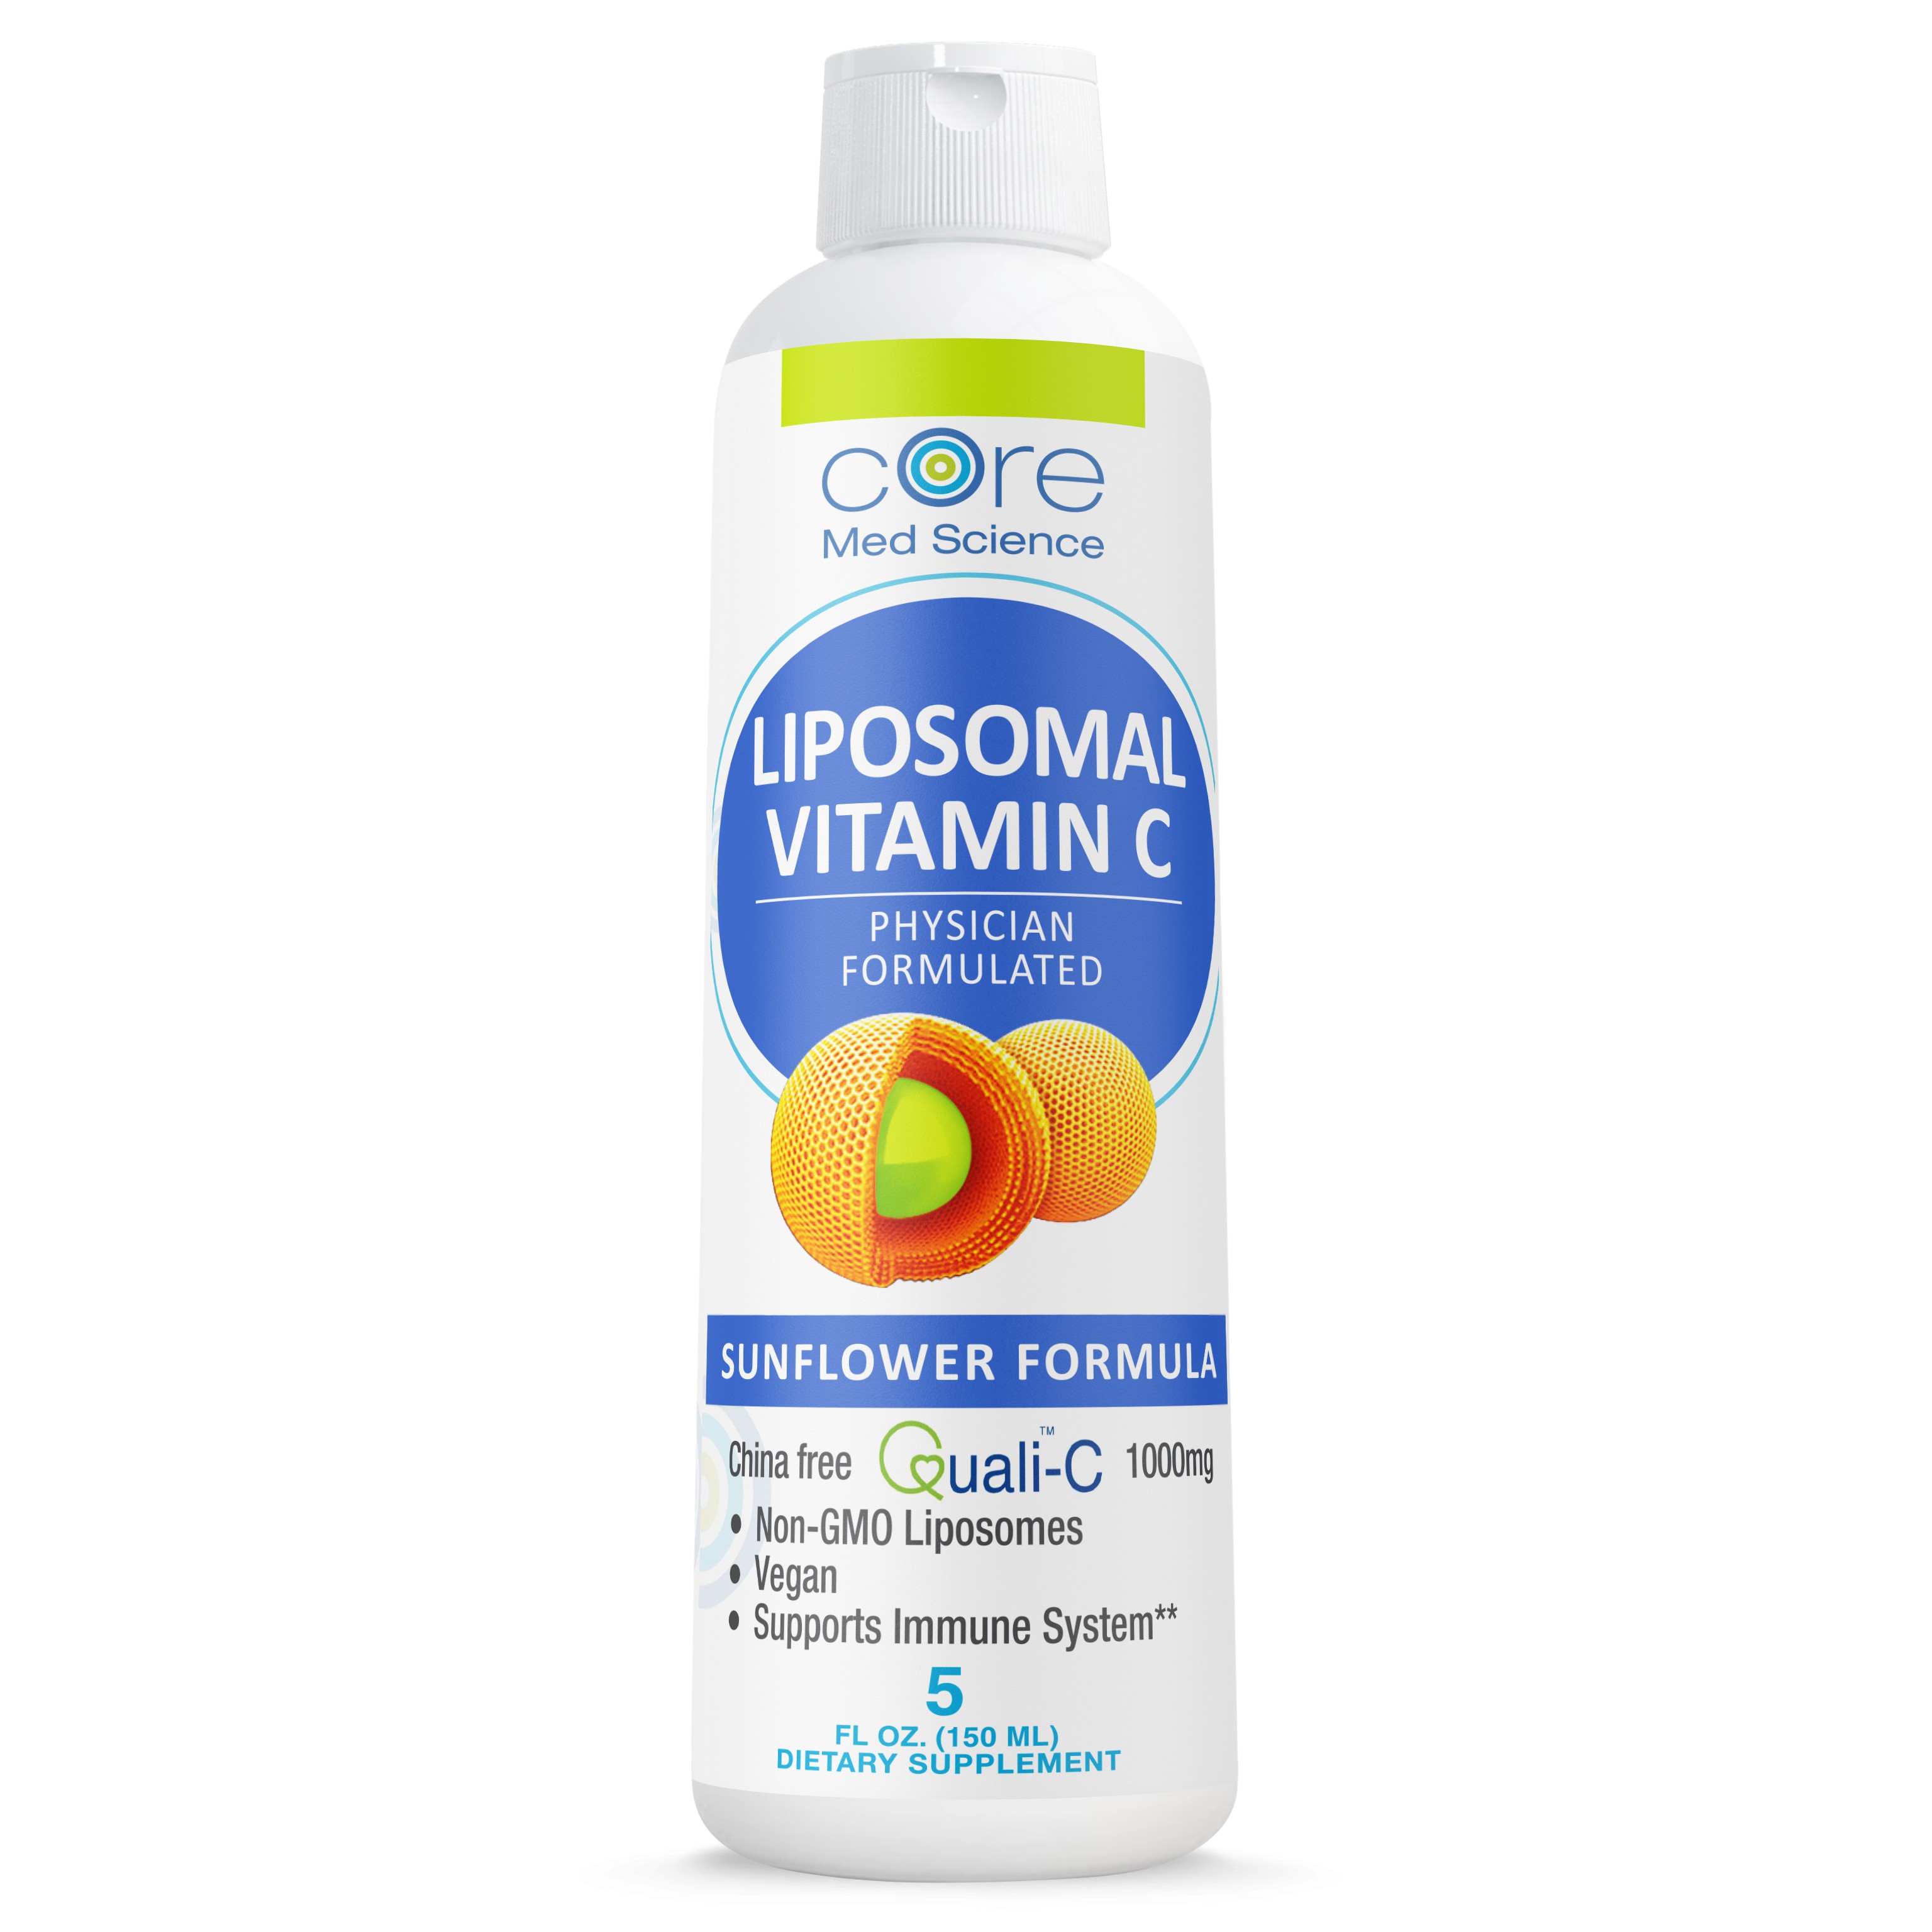 Liposomal-Vitamin-C with cash back rebate